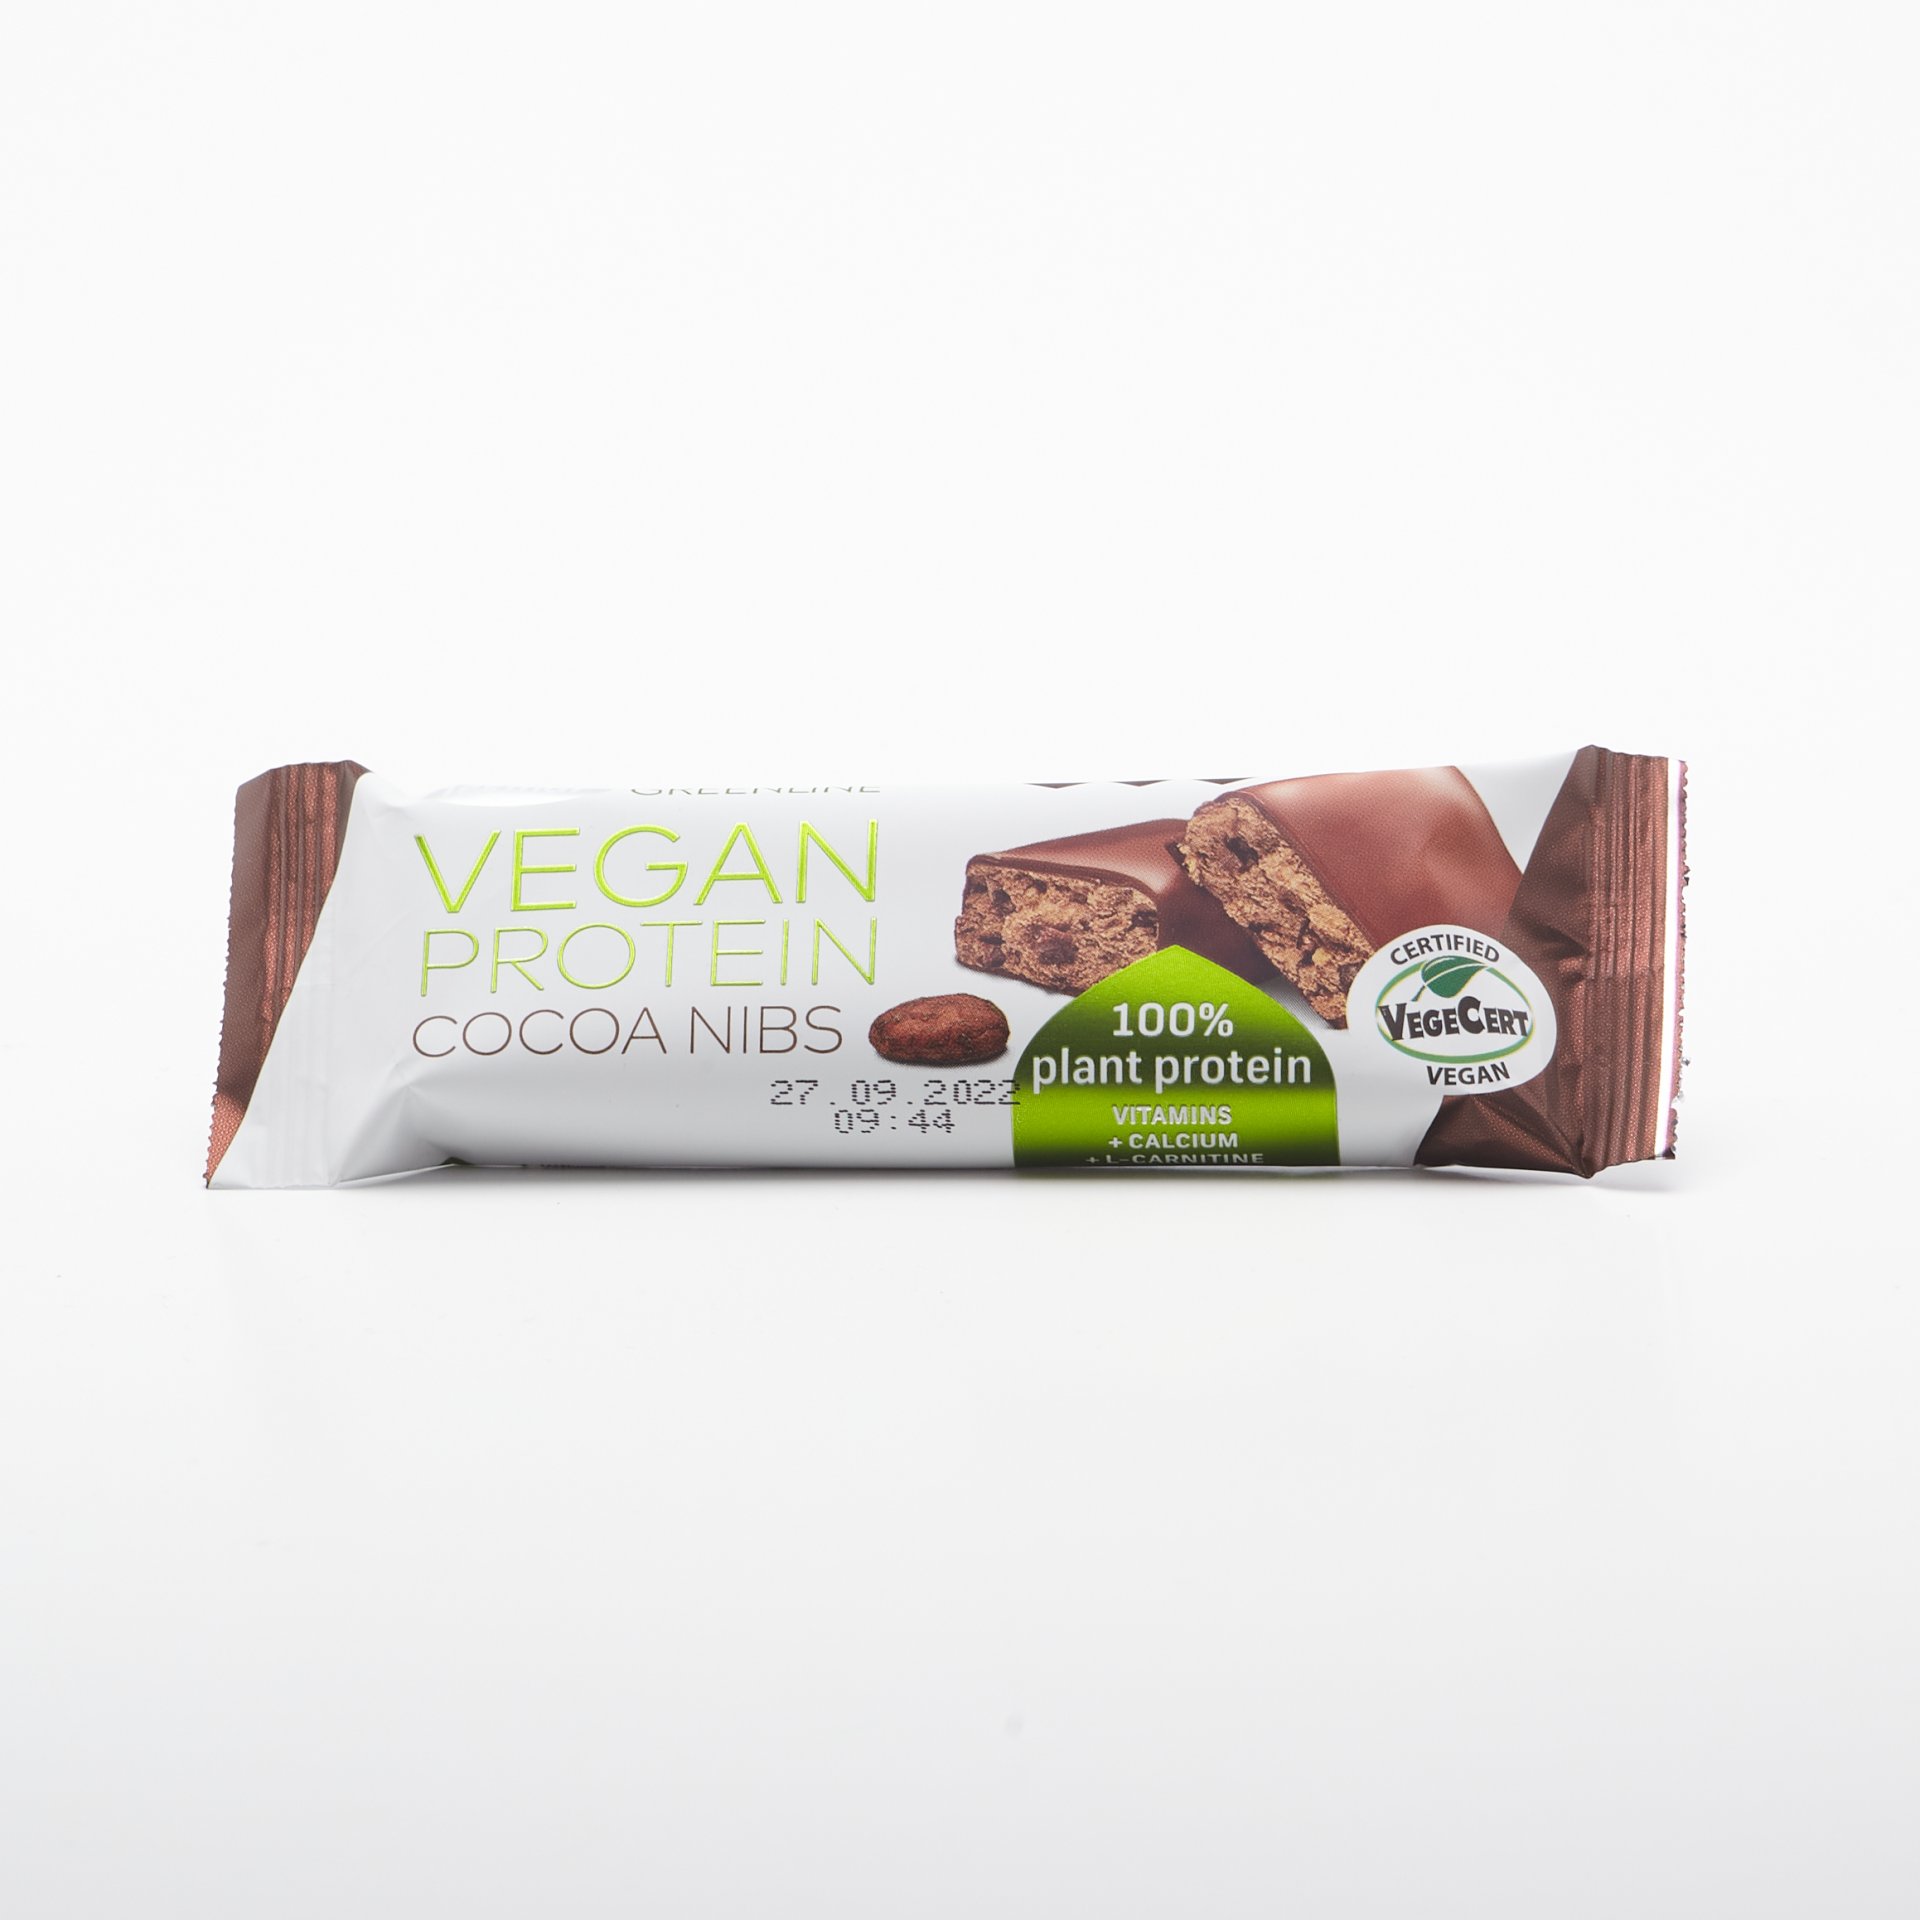 Vegan protein cocoa nibs 40g